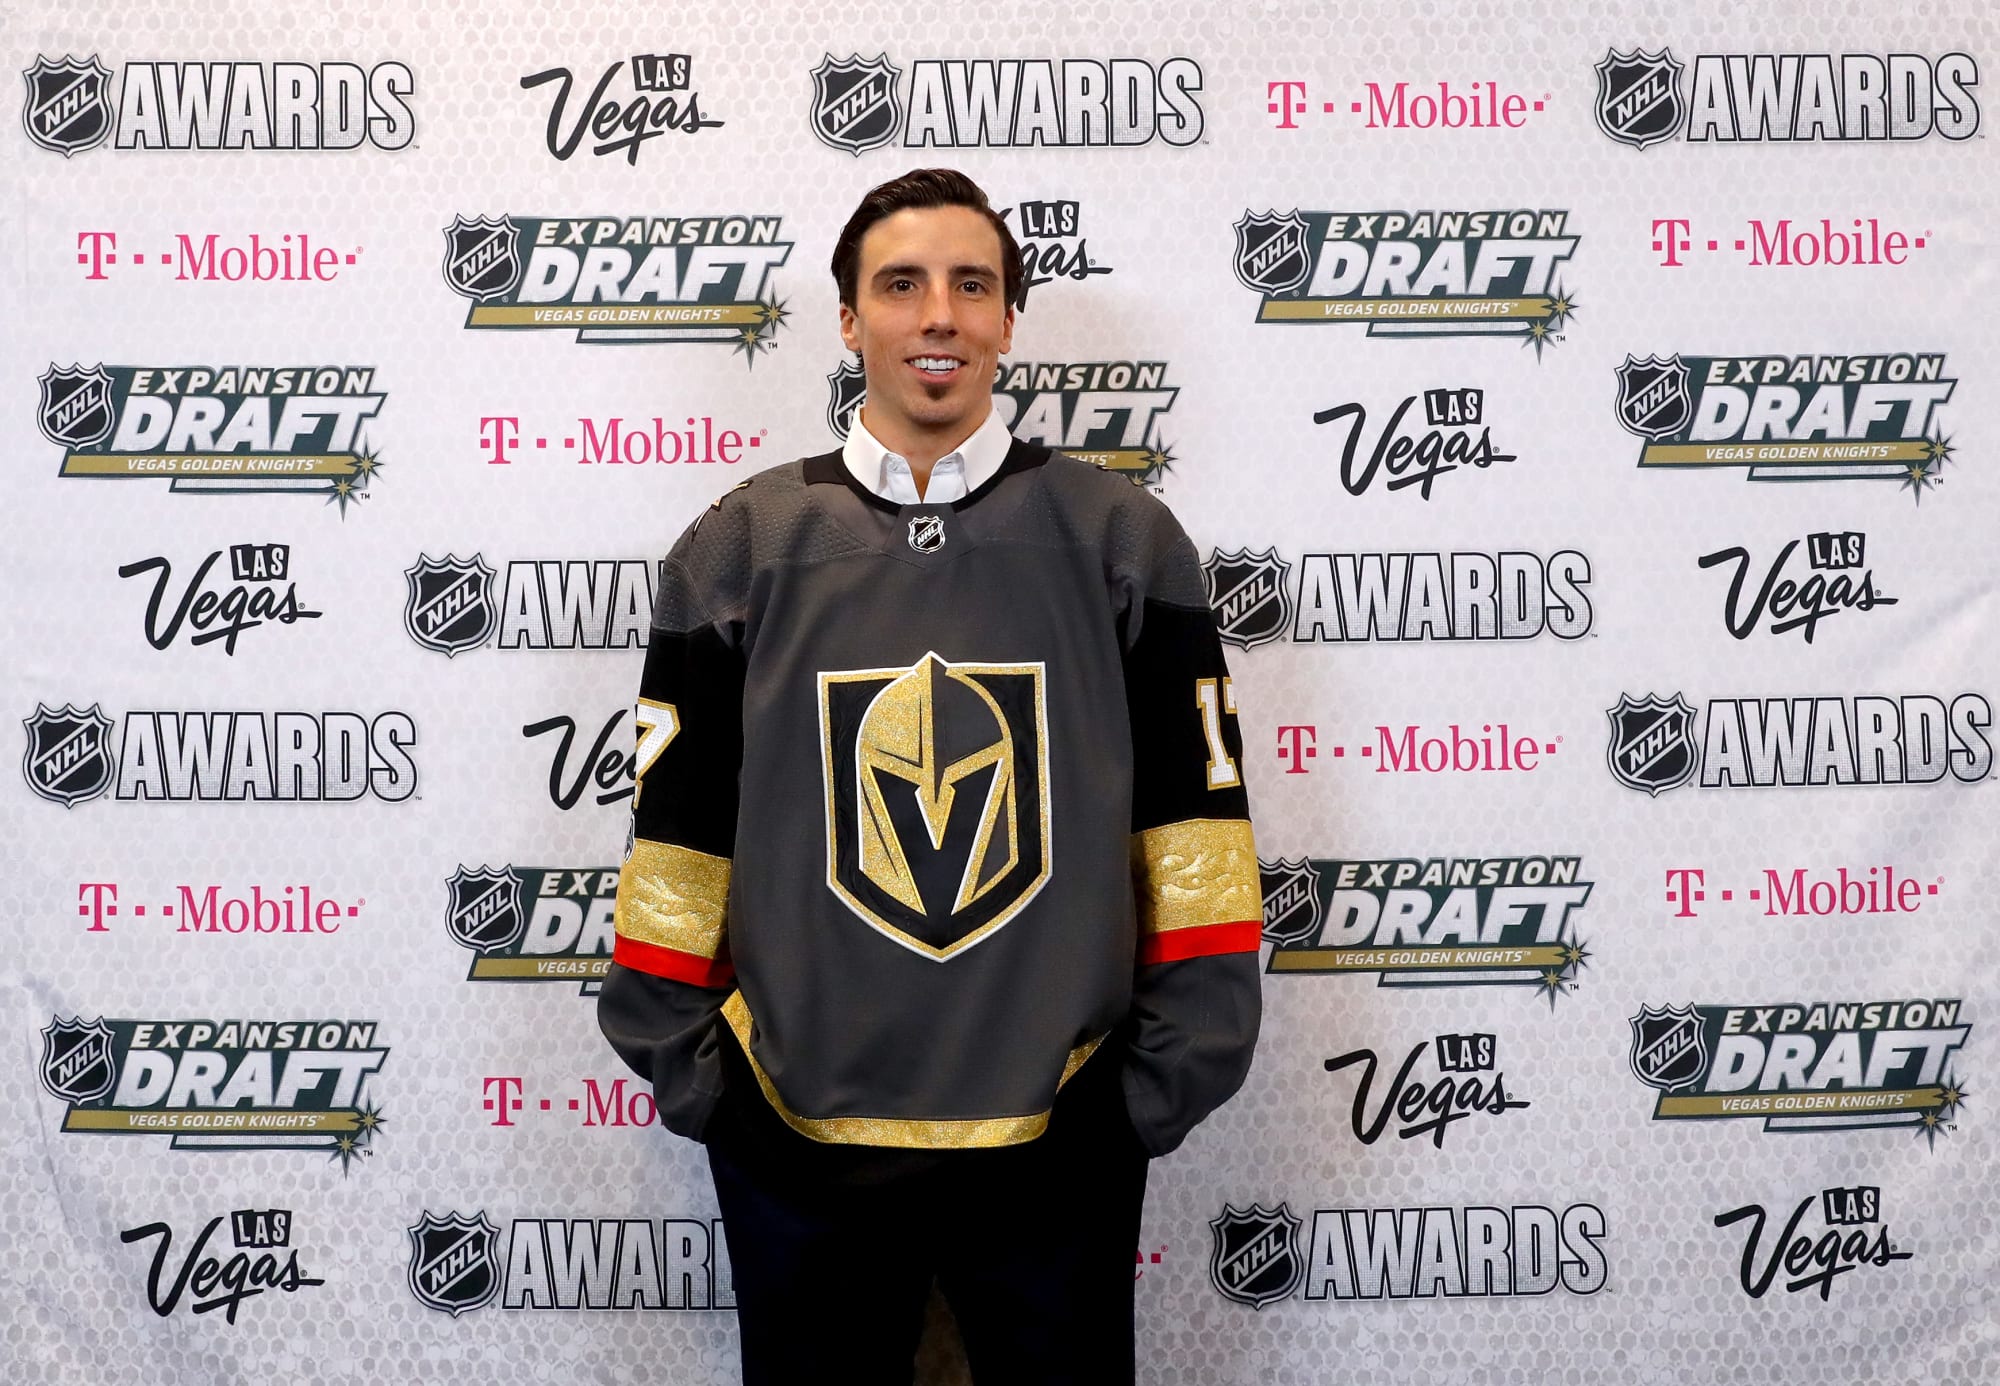 Vegas Golden Knights roster: NHL expansion draft picks